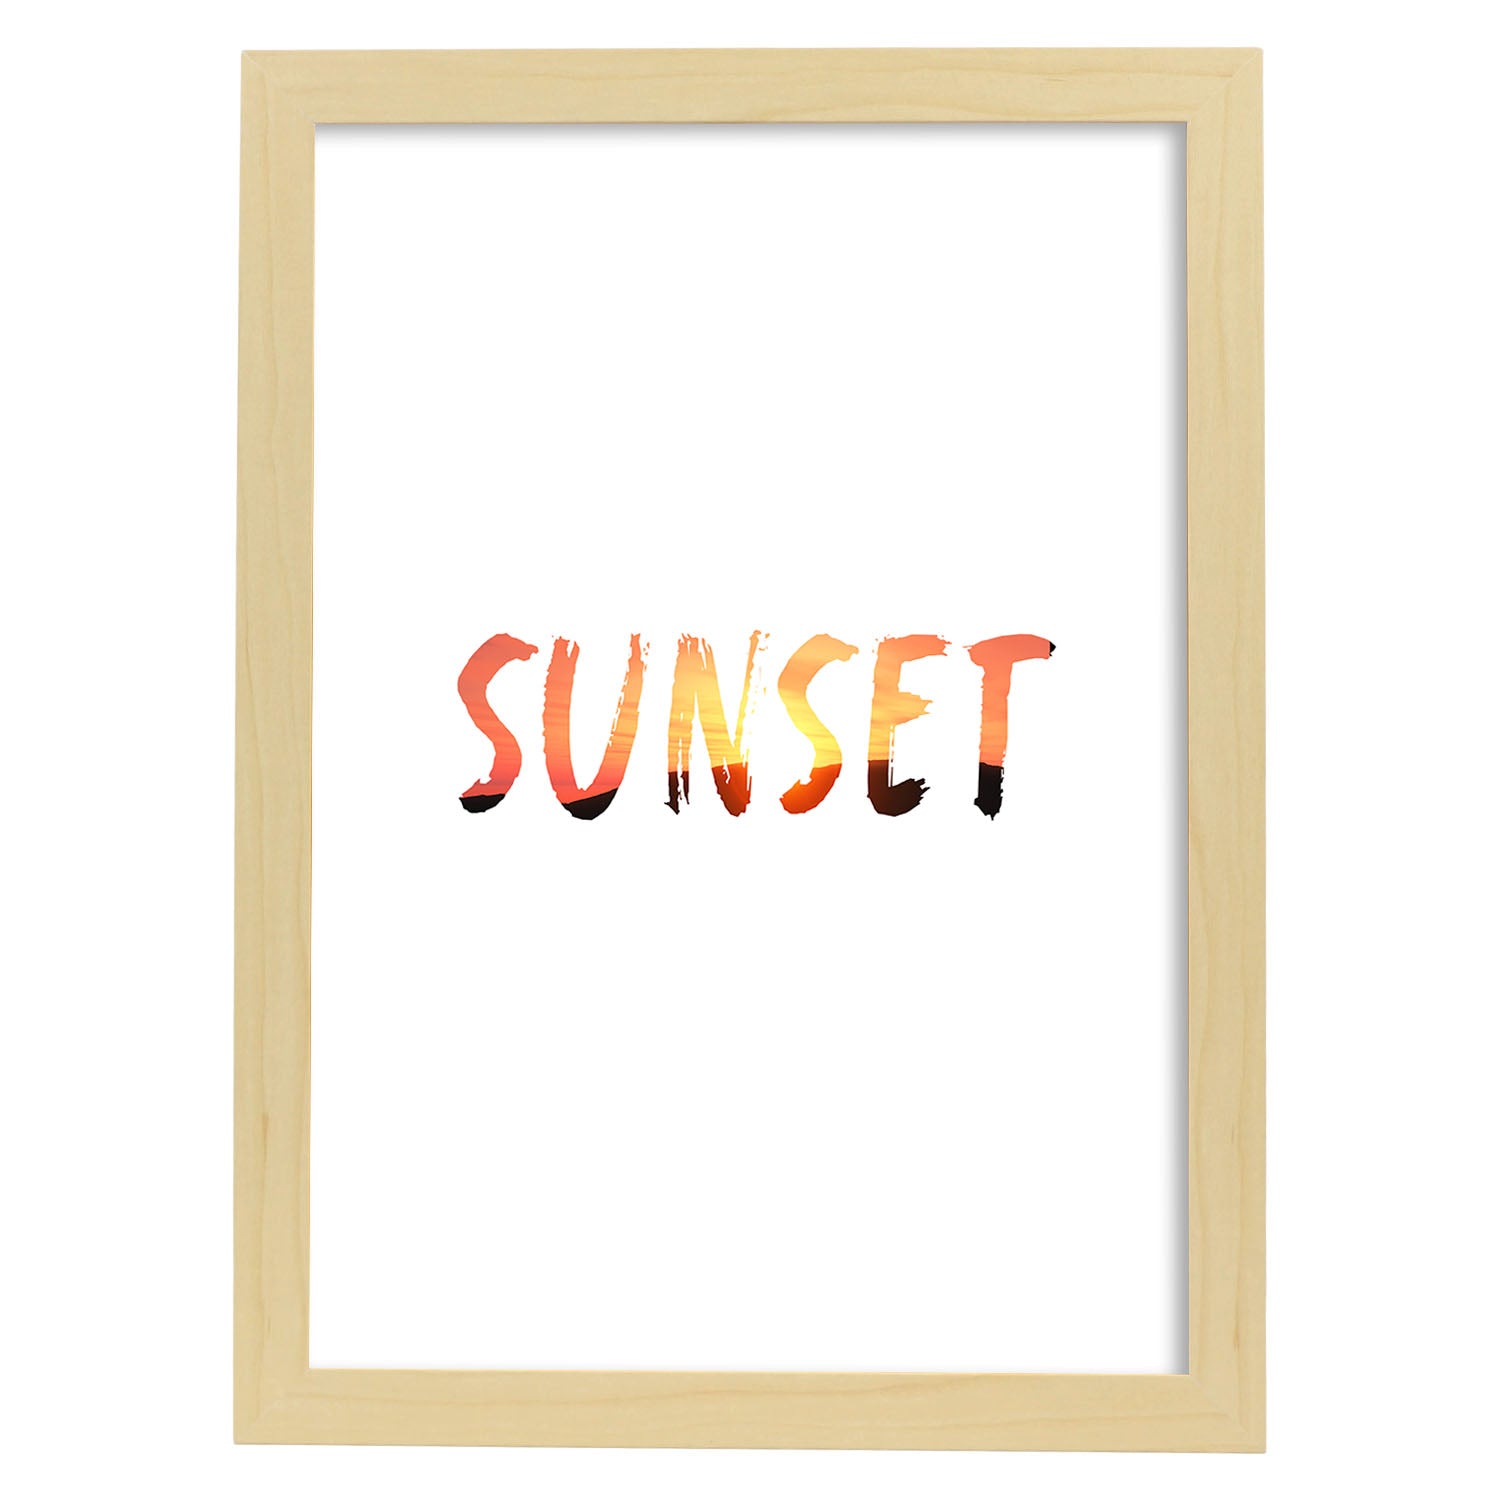 Lamina artistica decorativa con ilustración de sunset estilo Mensaje inspiracional-Artwork-Nacnic-A3-Marco Madera clara-Nacnic Estudio SL